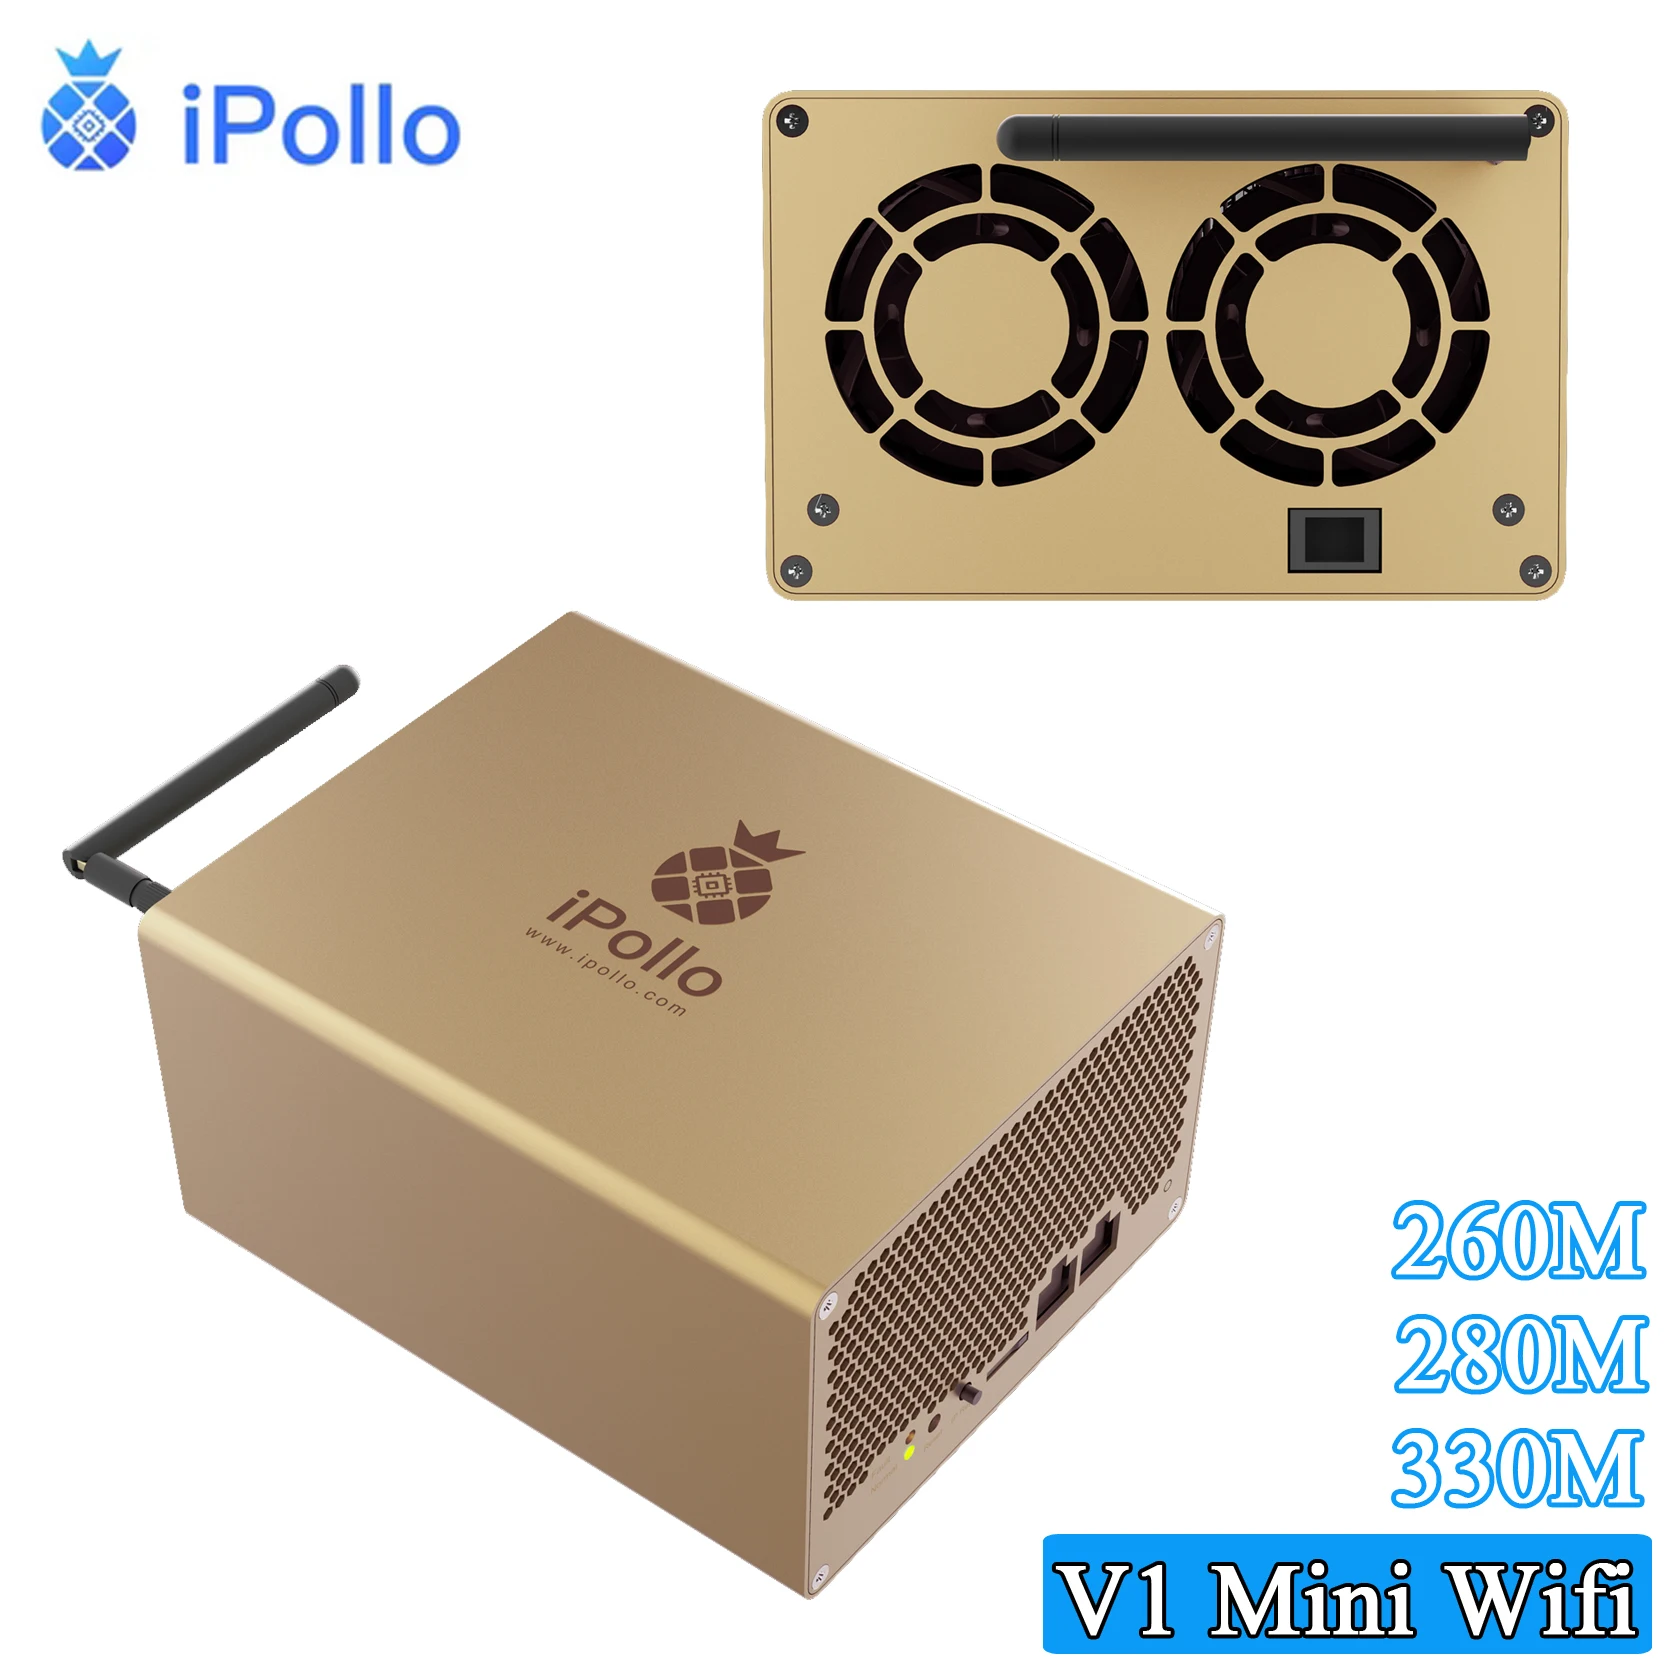 iPollo V1 Mini Wifi, 260M 280M 330M Asic Miner, в наличии Быстрая доставка